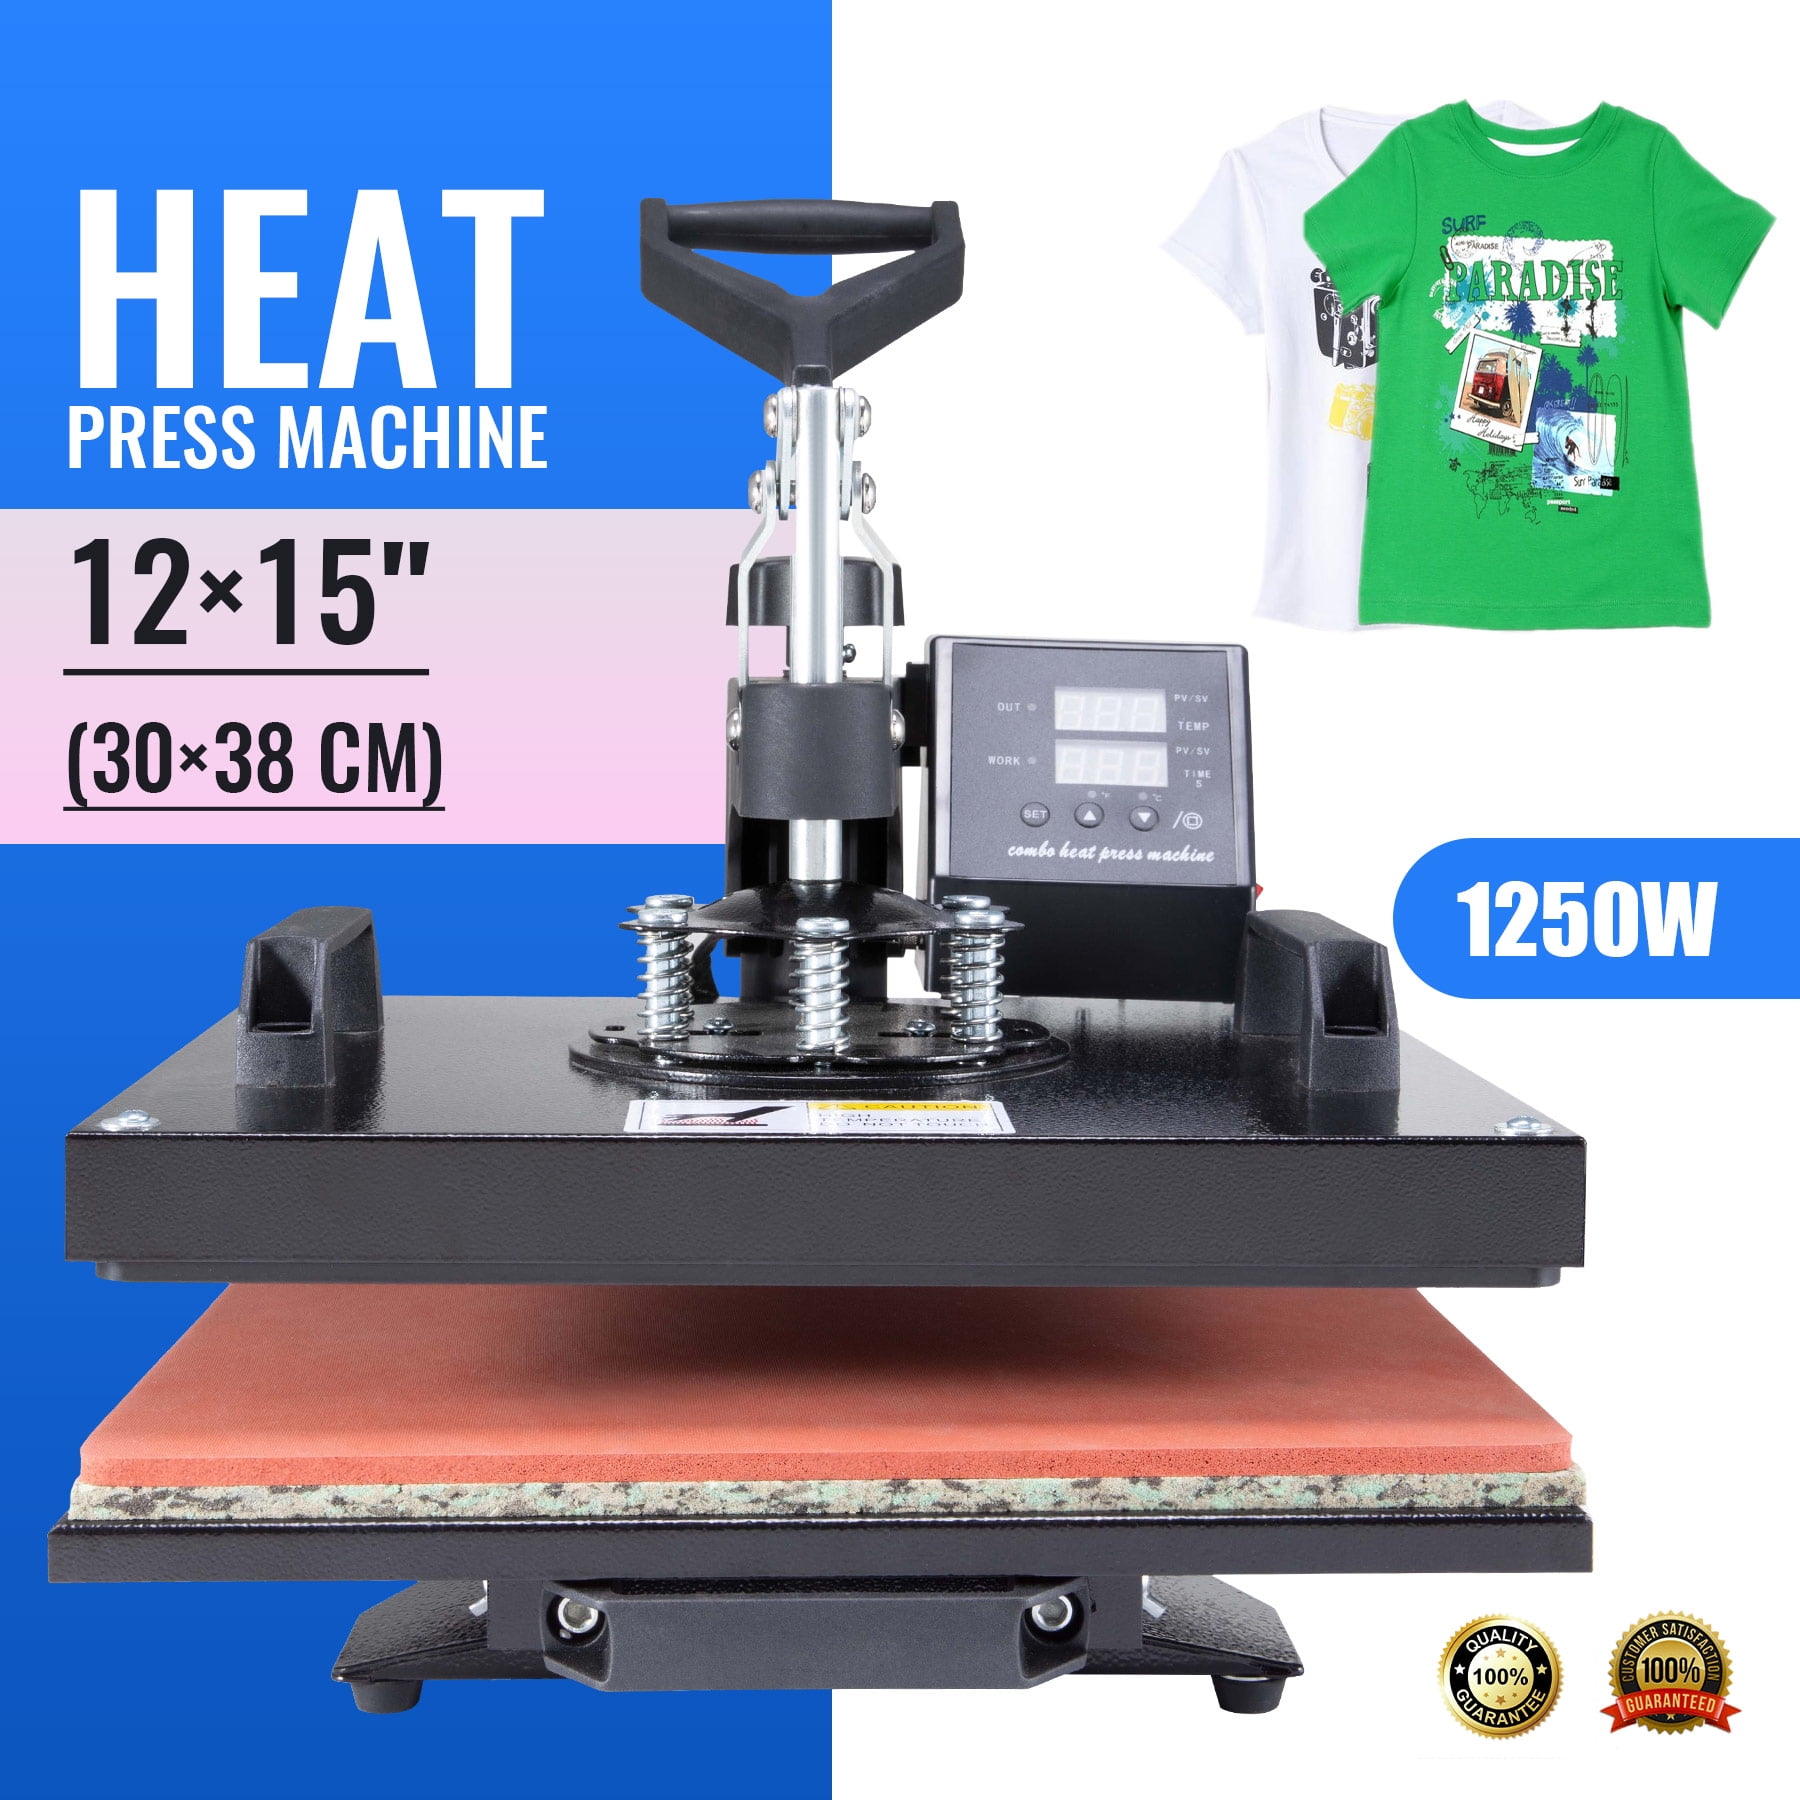 T Shirt Press Professional Swing-away Heat Press Machine Multifunction 12x15 OTA for sale online 